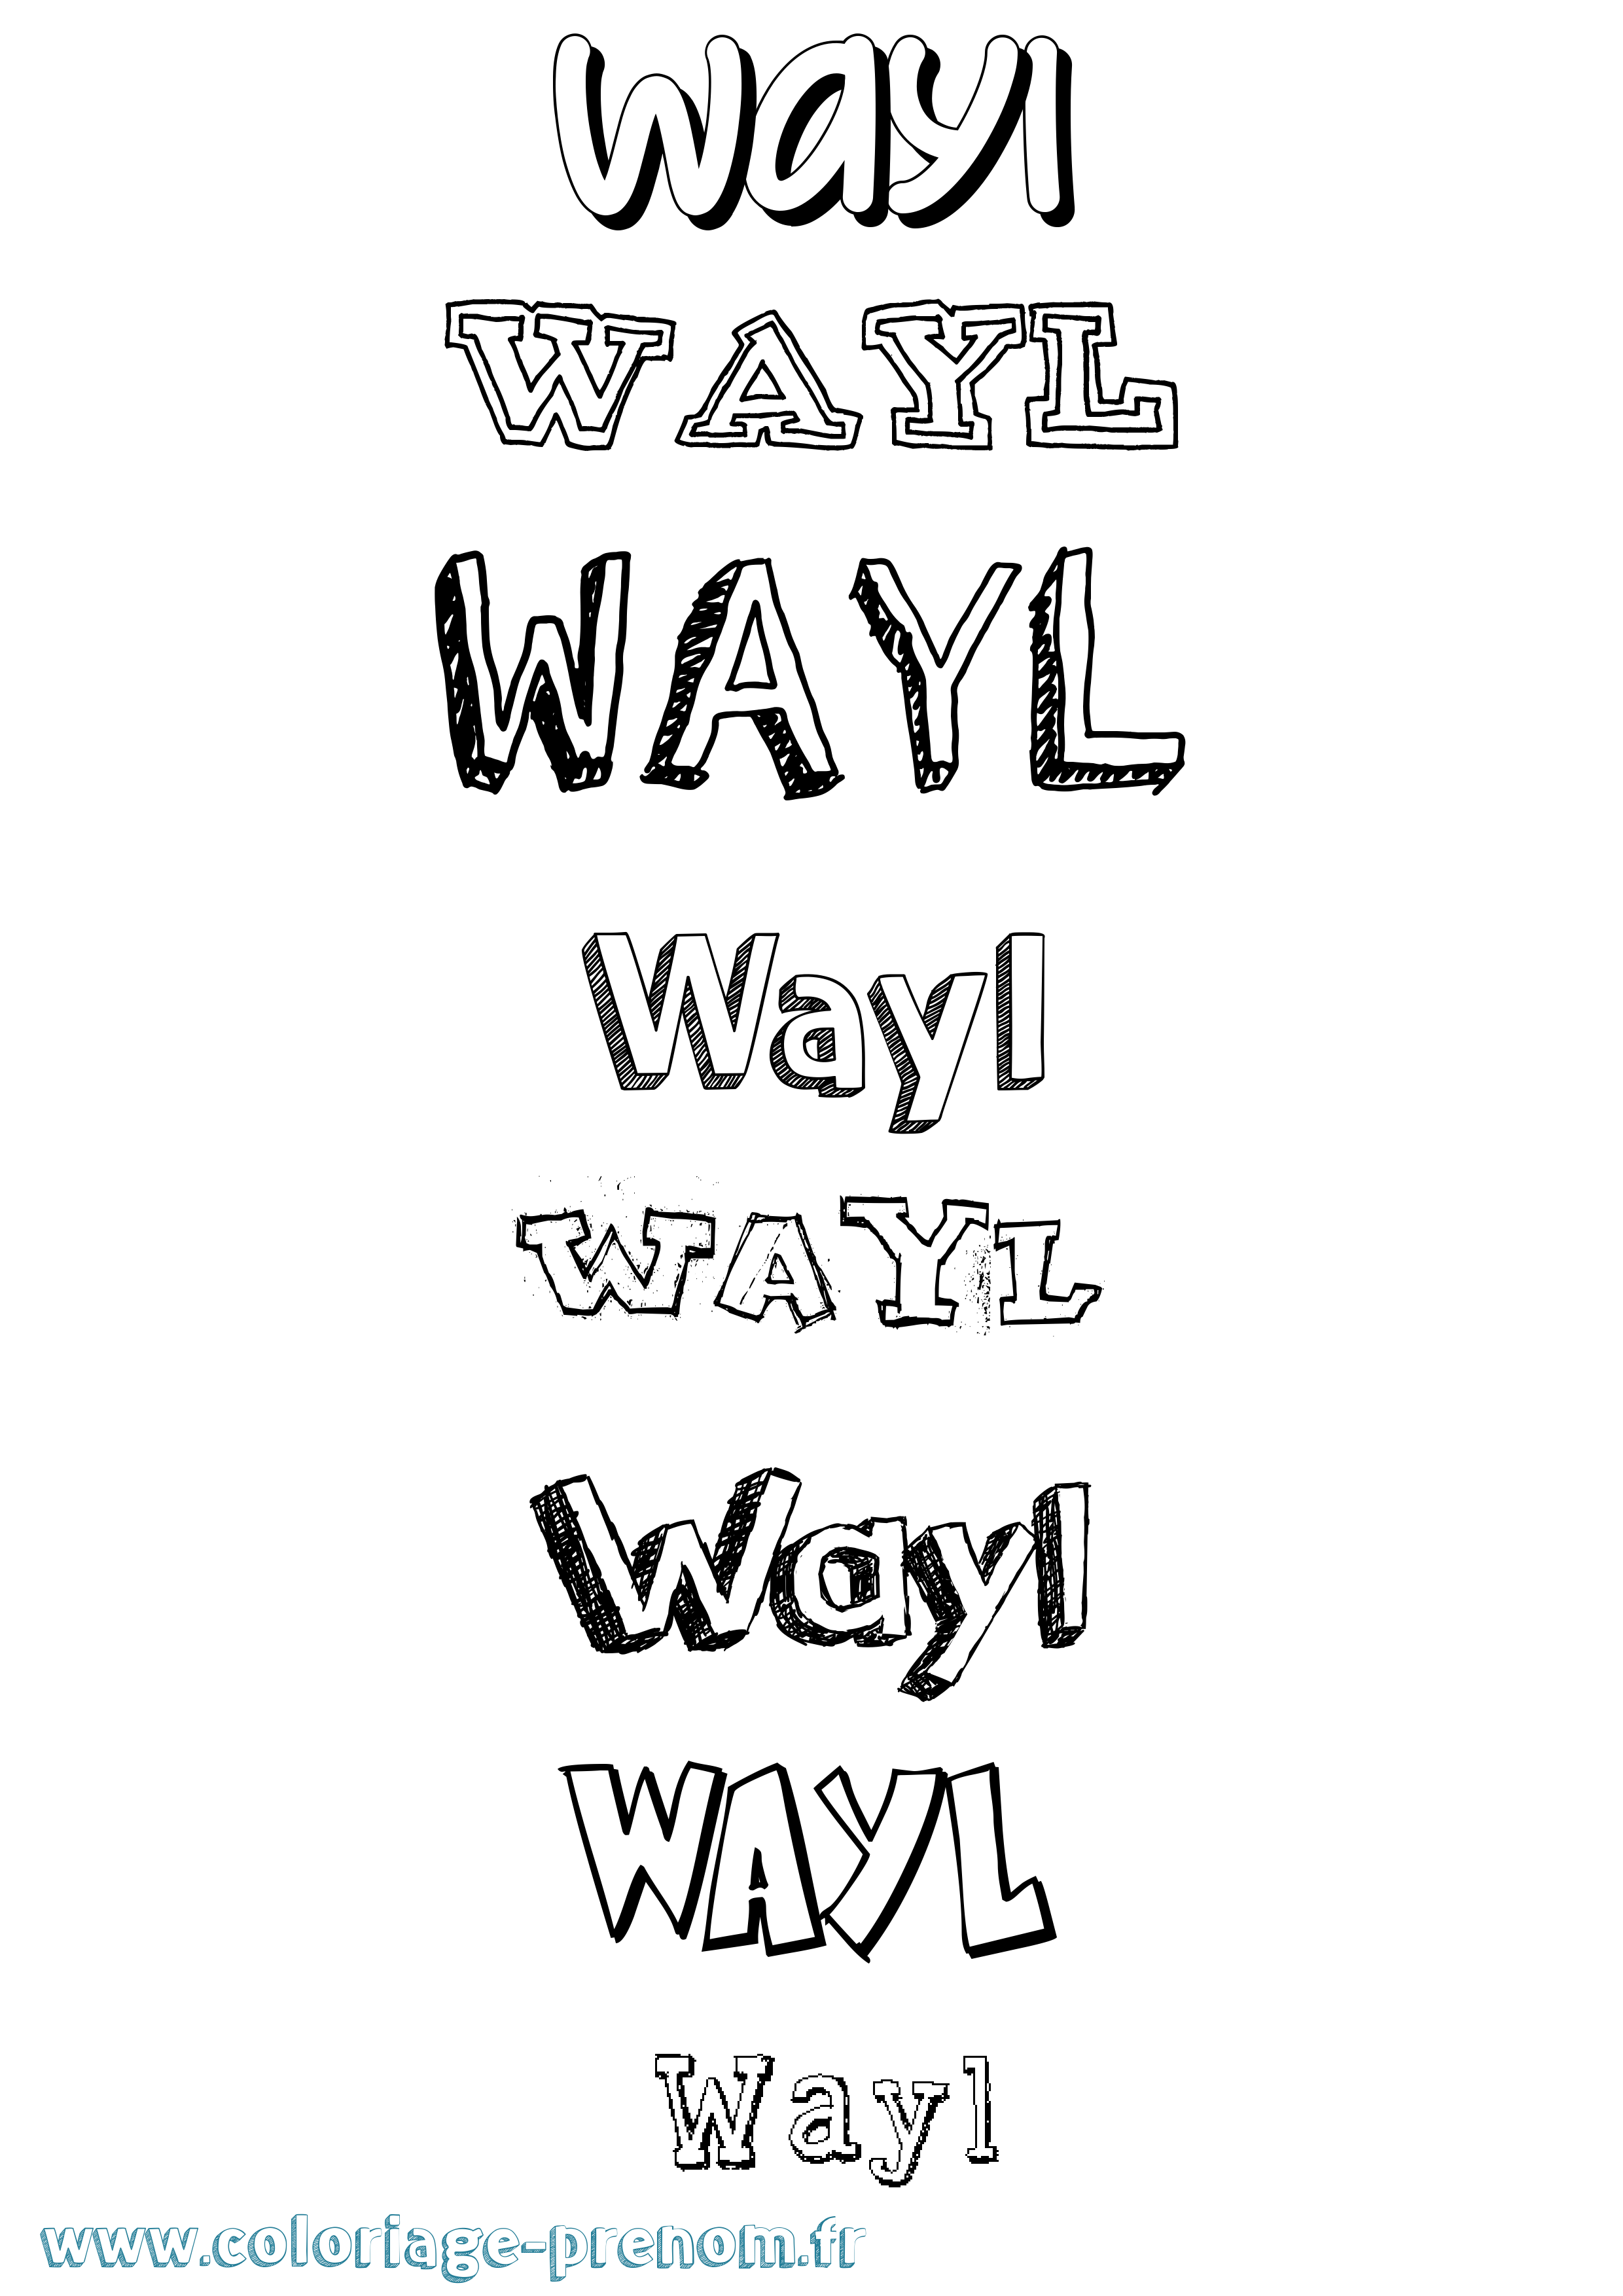 Coloriage prénom Wayl Dessiné